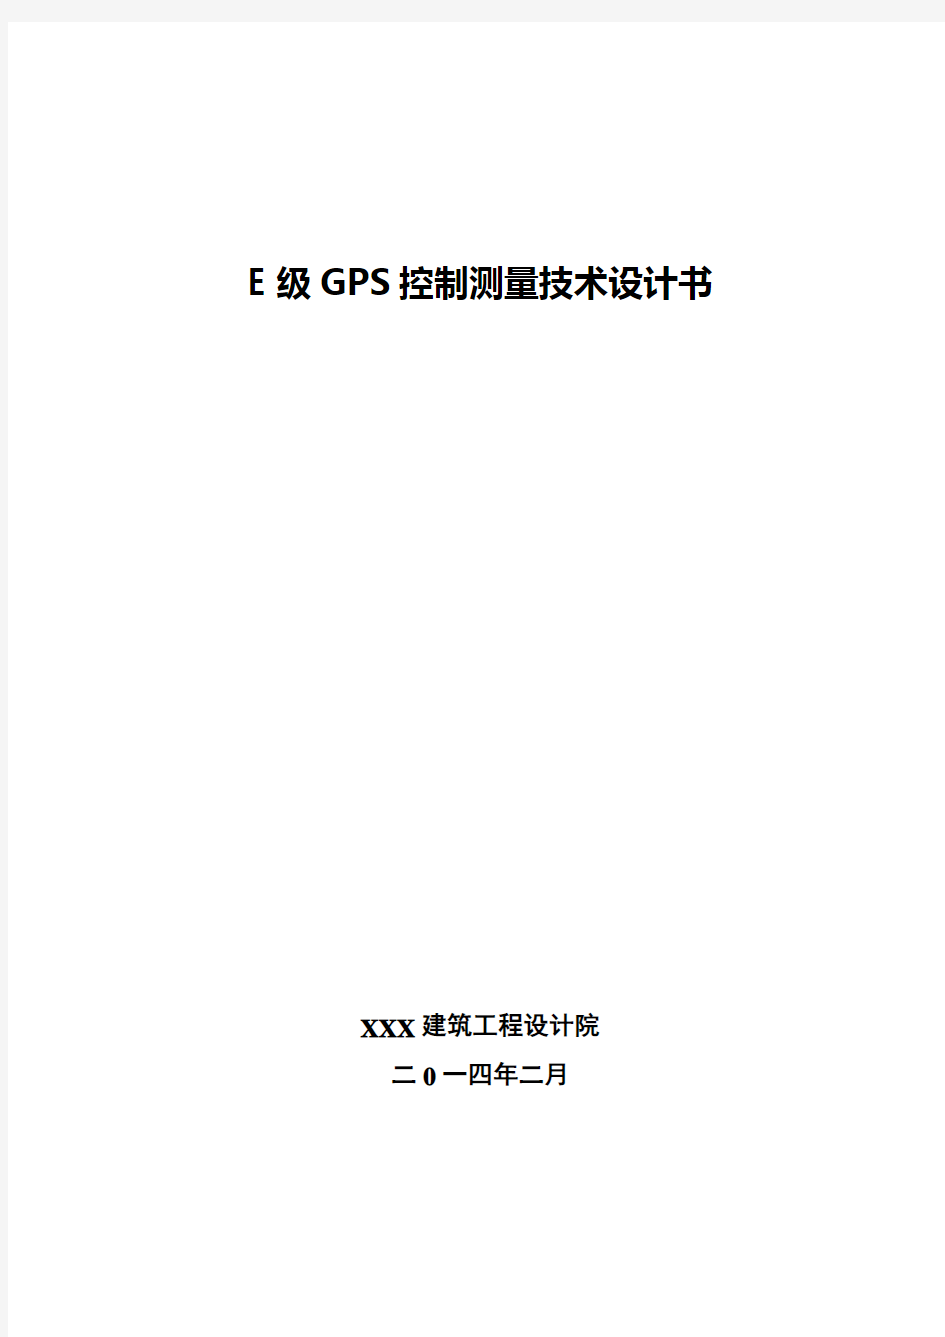 E级GPS控制测量技术设计书